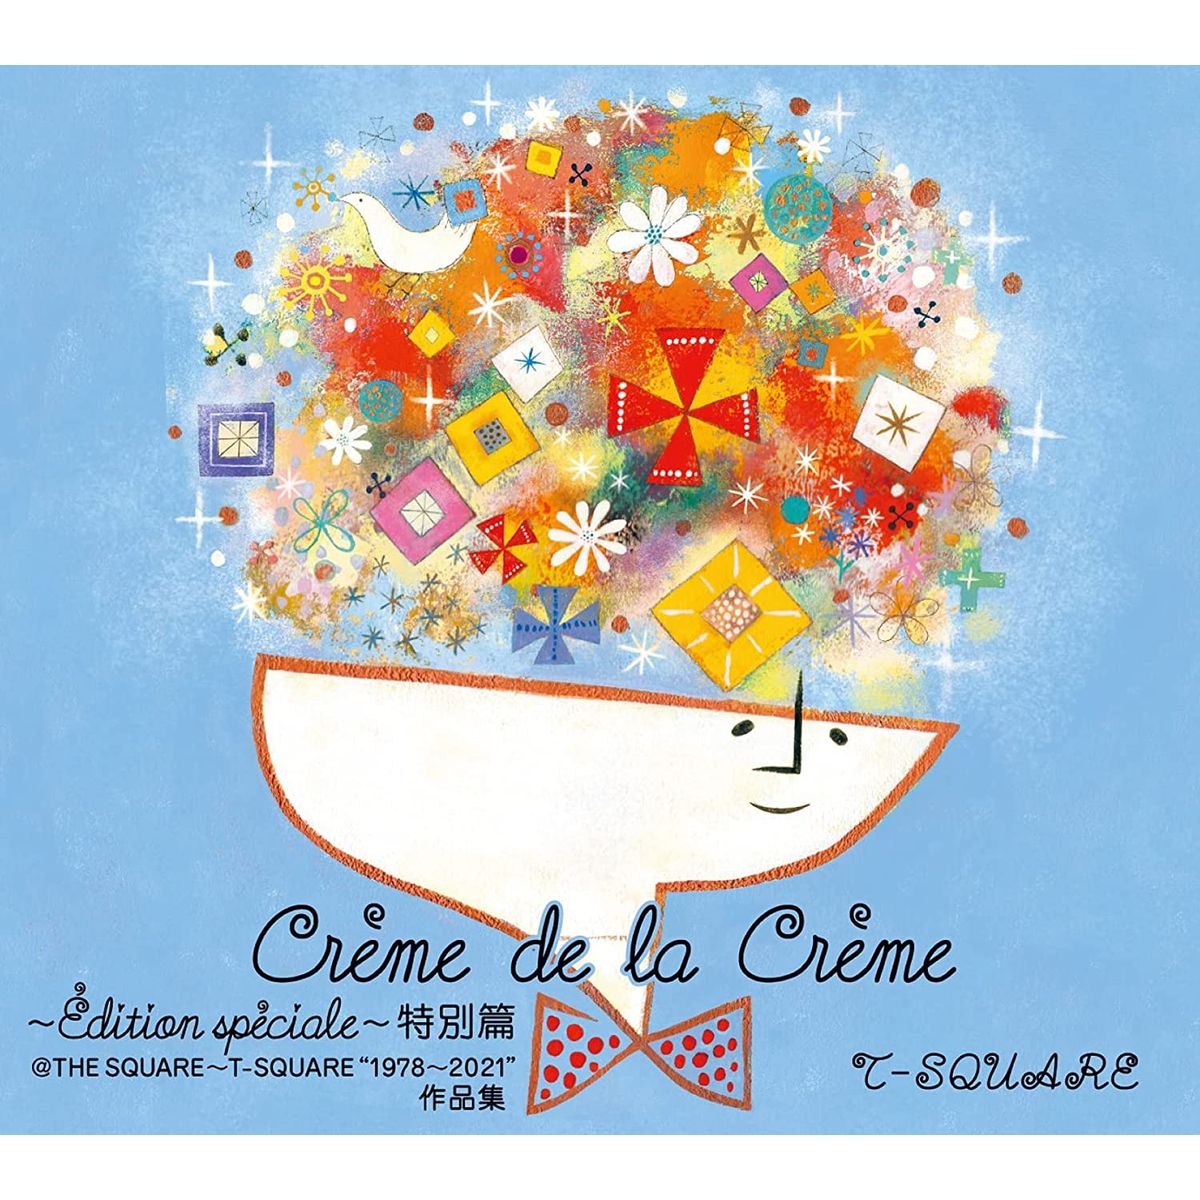 ■【CD+BD】Creme de la Creme ~Edition speciale~ 特別篇＠THE SQUARE~T-SQUARE 1978~2021作品集 7枚組